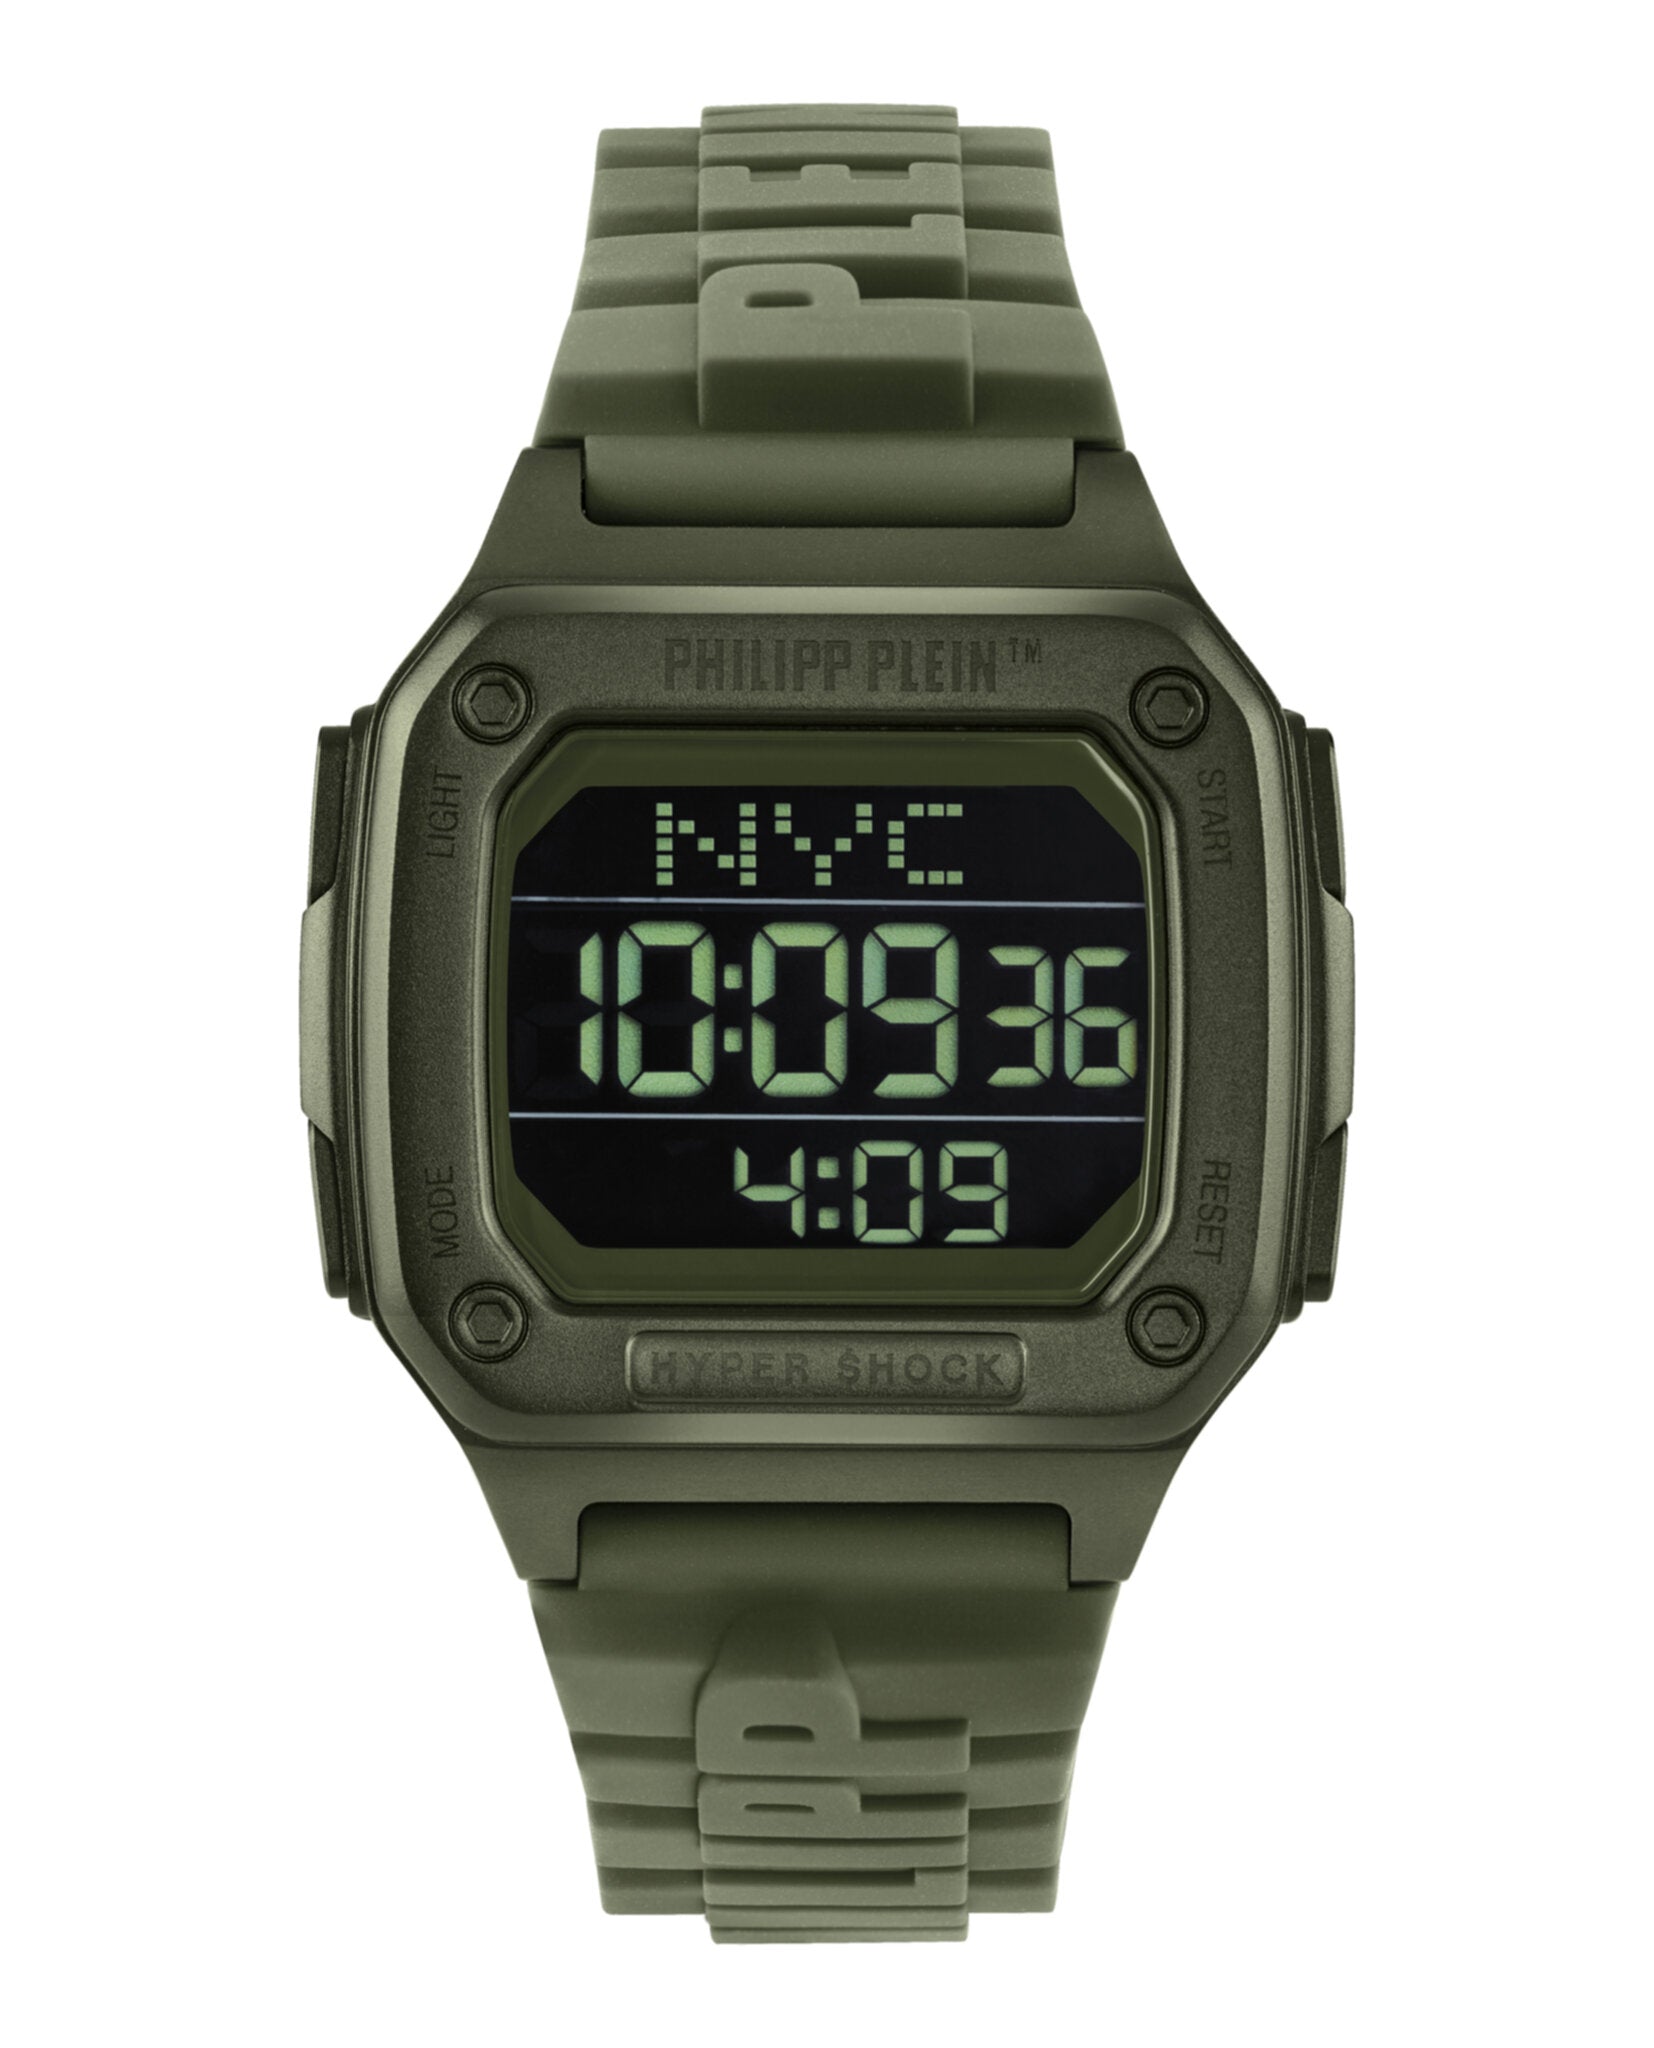 Hyper $hock Digital Watch